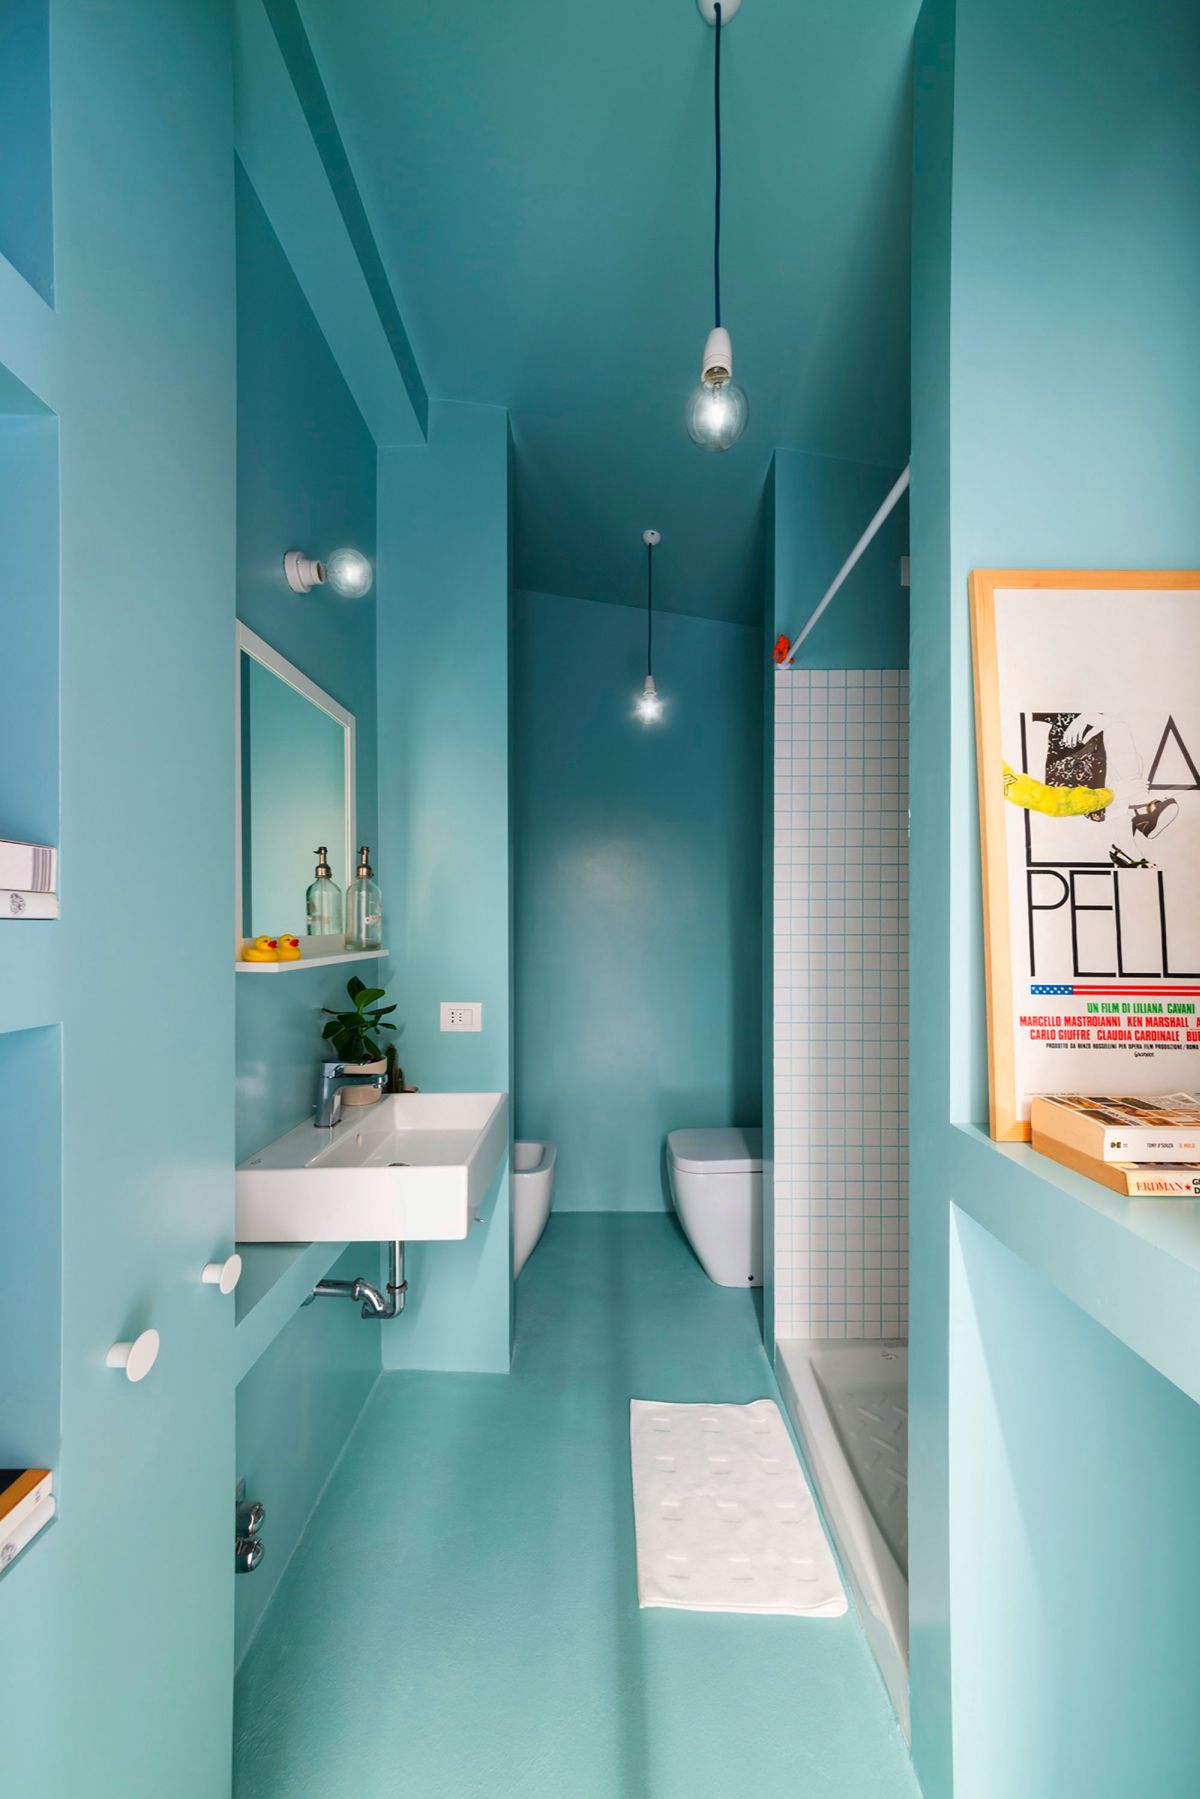 A narrow turquoise bathroom